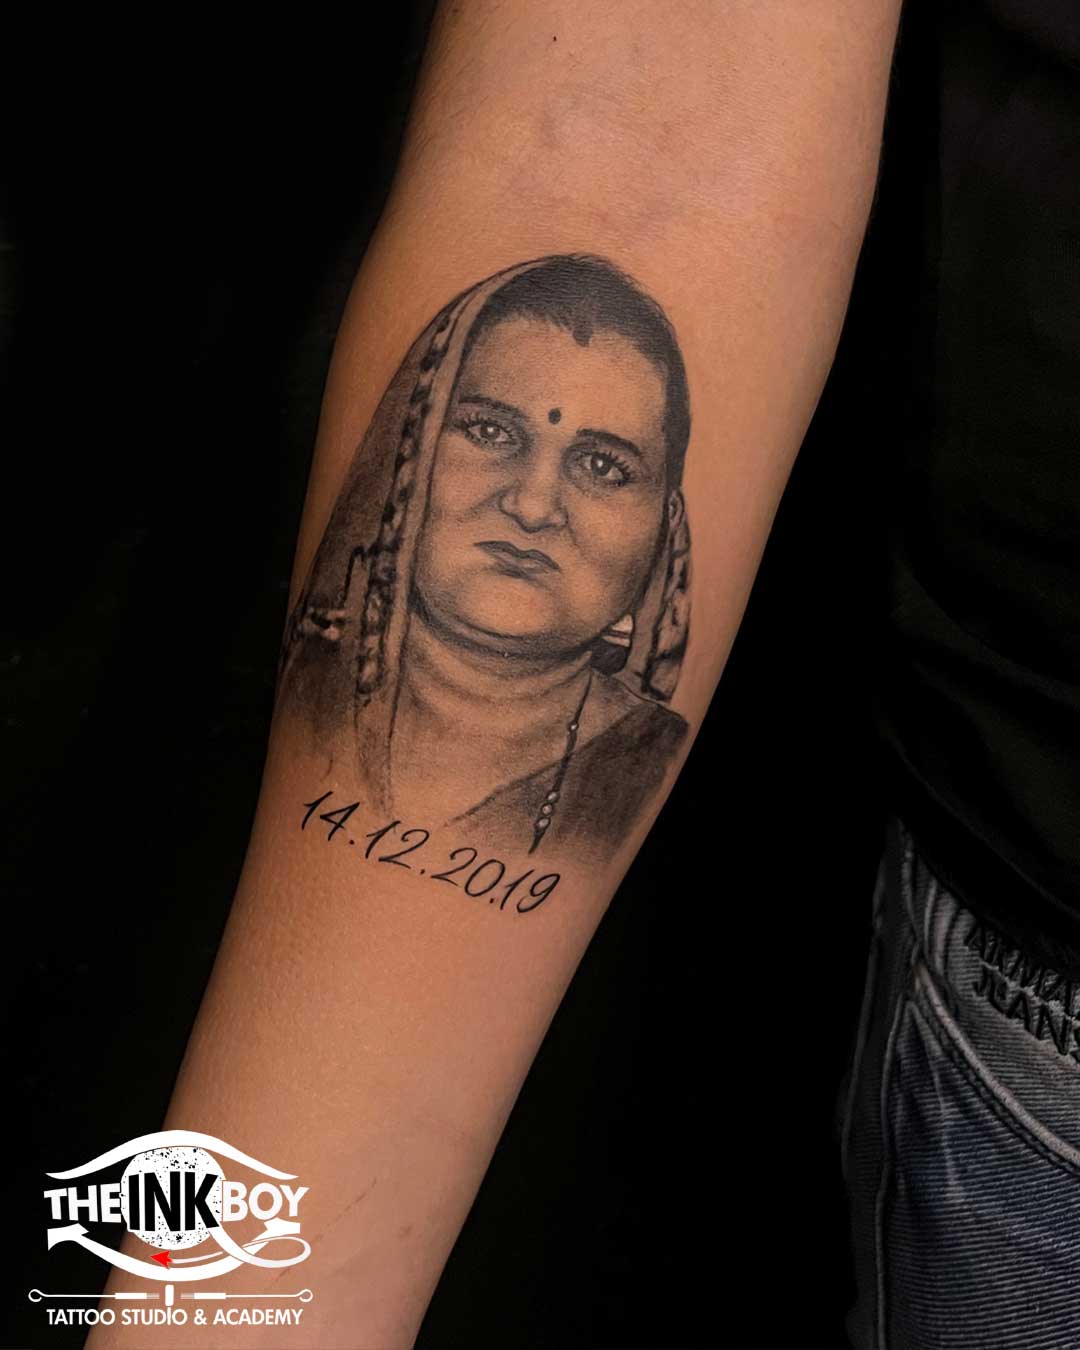 Realistic Portrait Tattoo on Woman's Arm